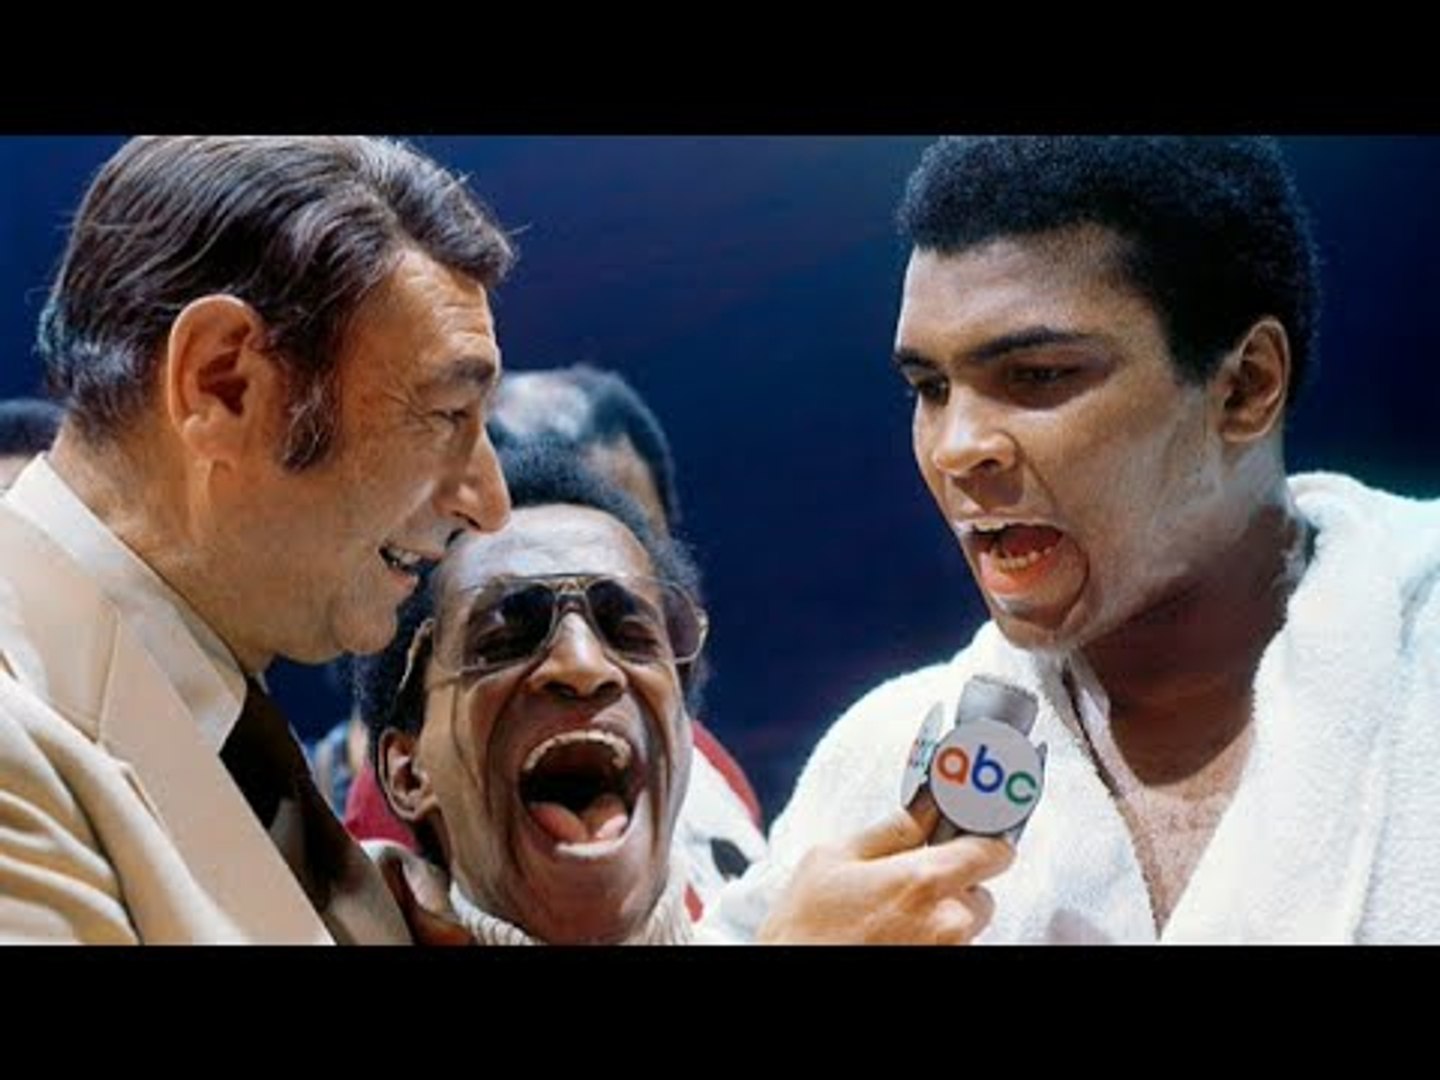 Muhammad Ali - Funny Speeches, Interviews, Trash Talk - video Dailymotion